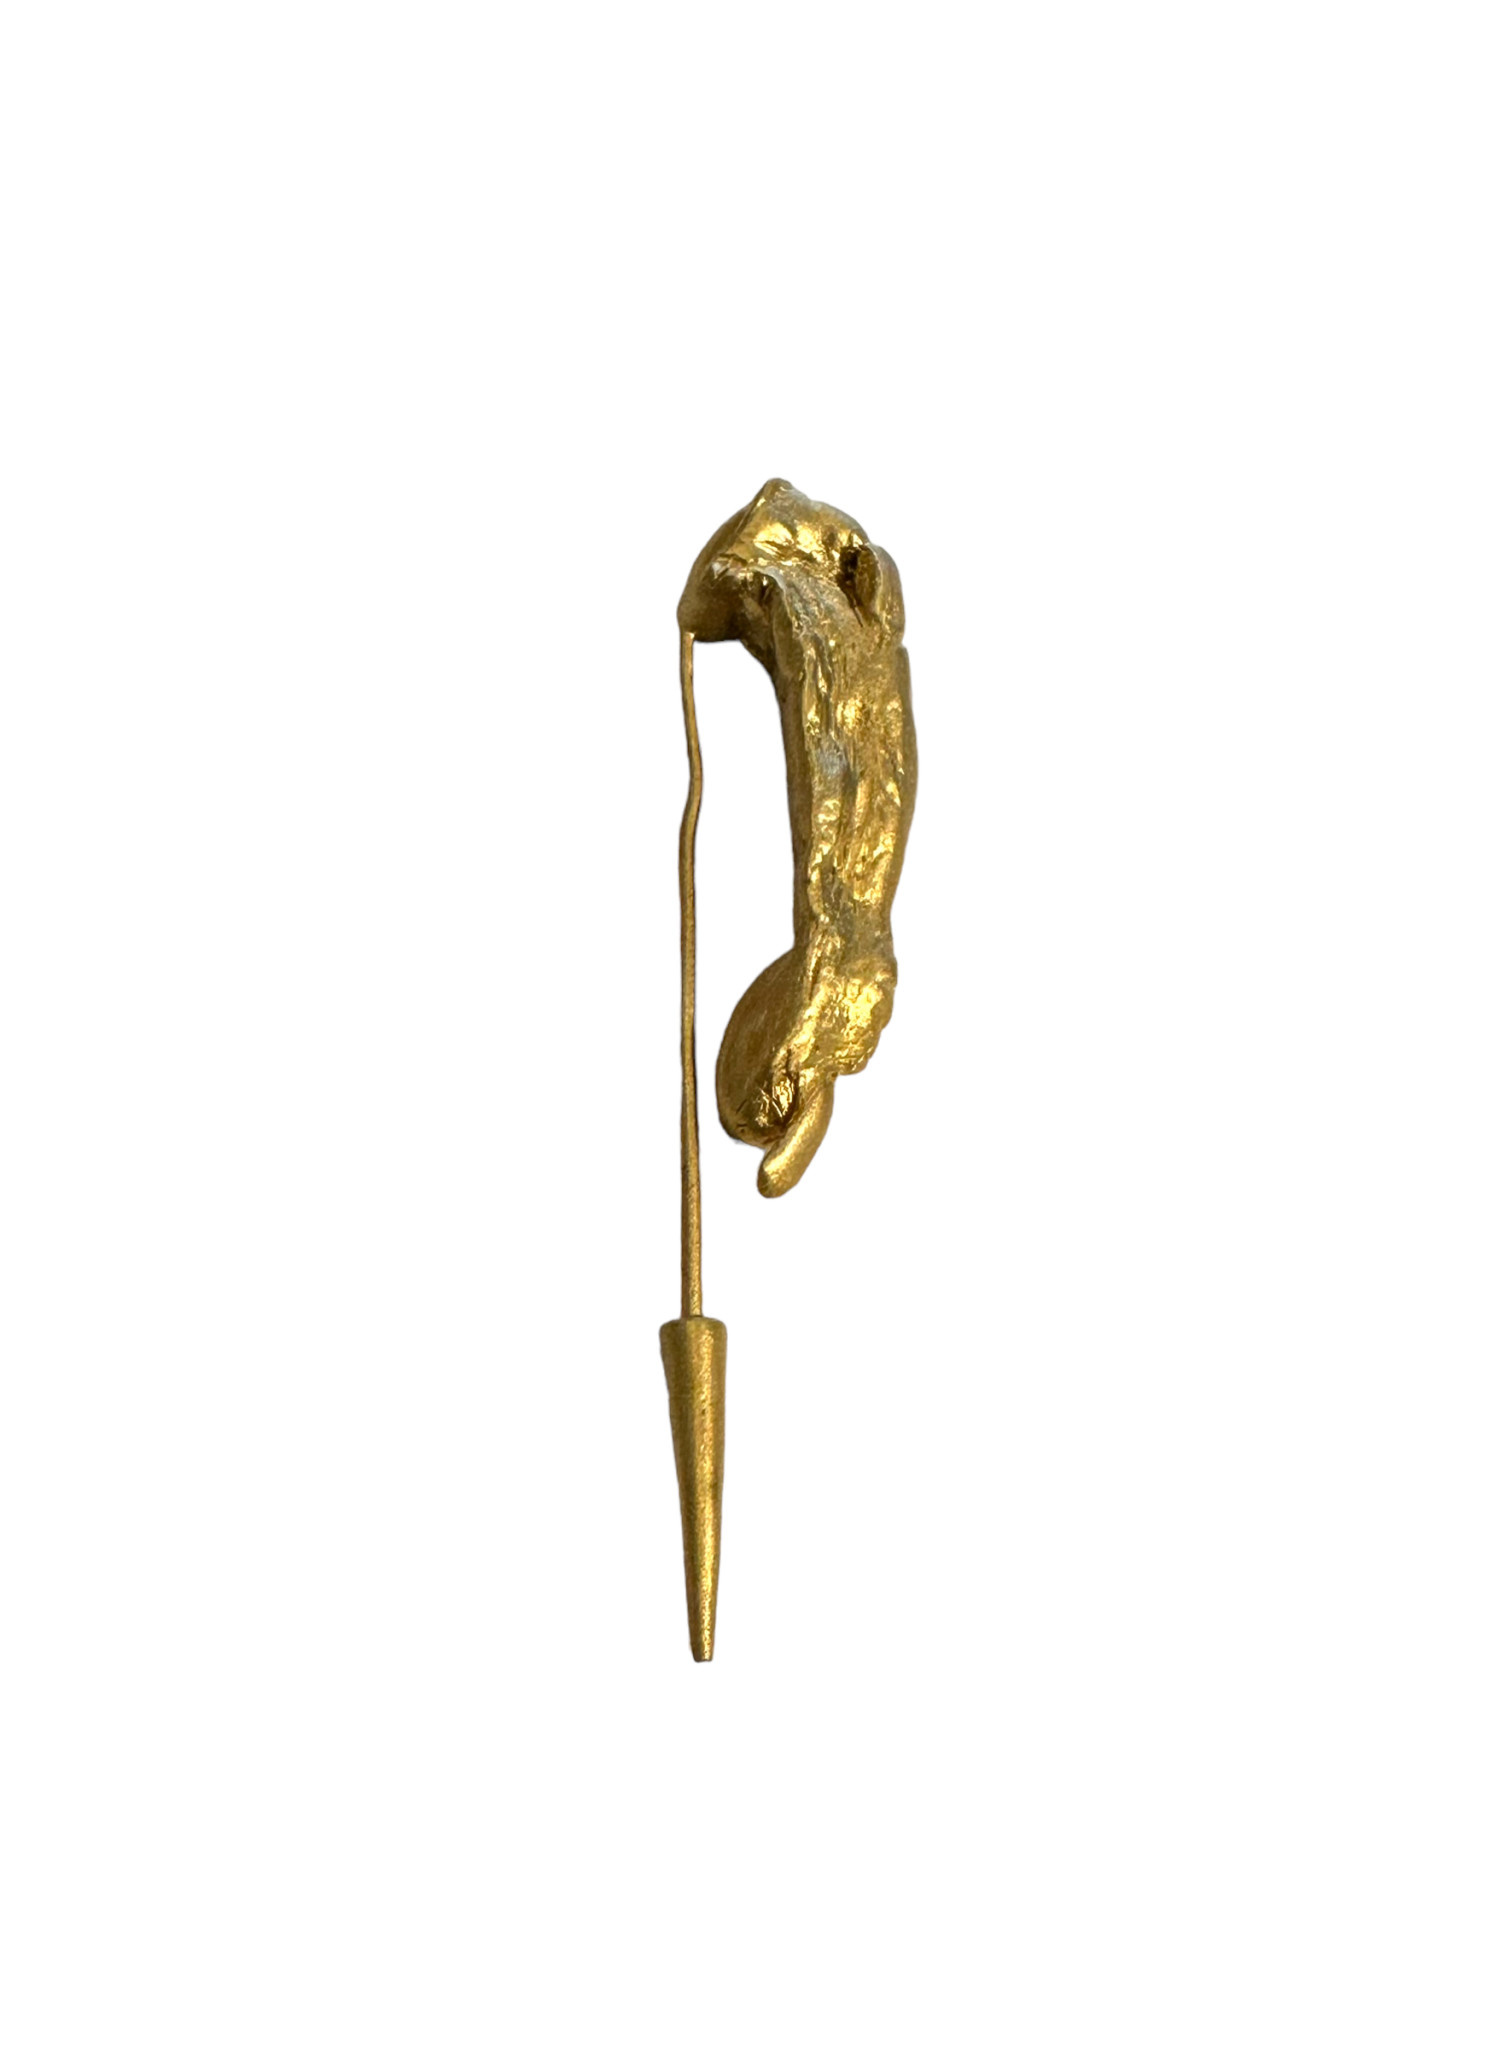 Lisa Roet - Gibbon Finger Pin - Brass Gold Plated-1